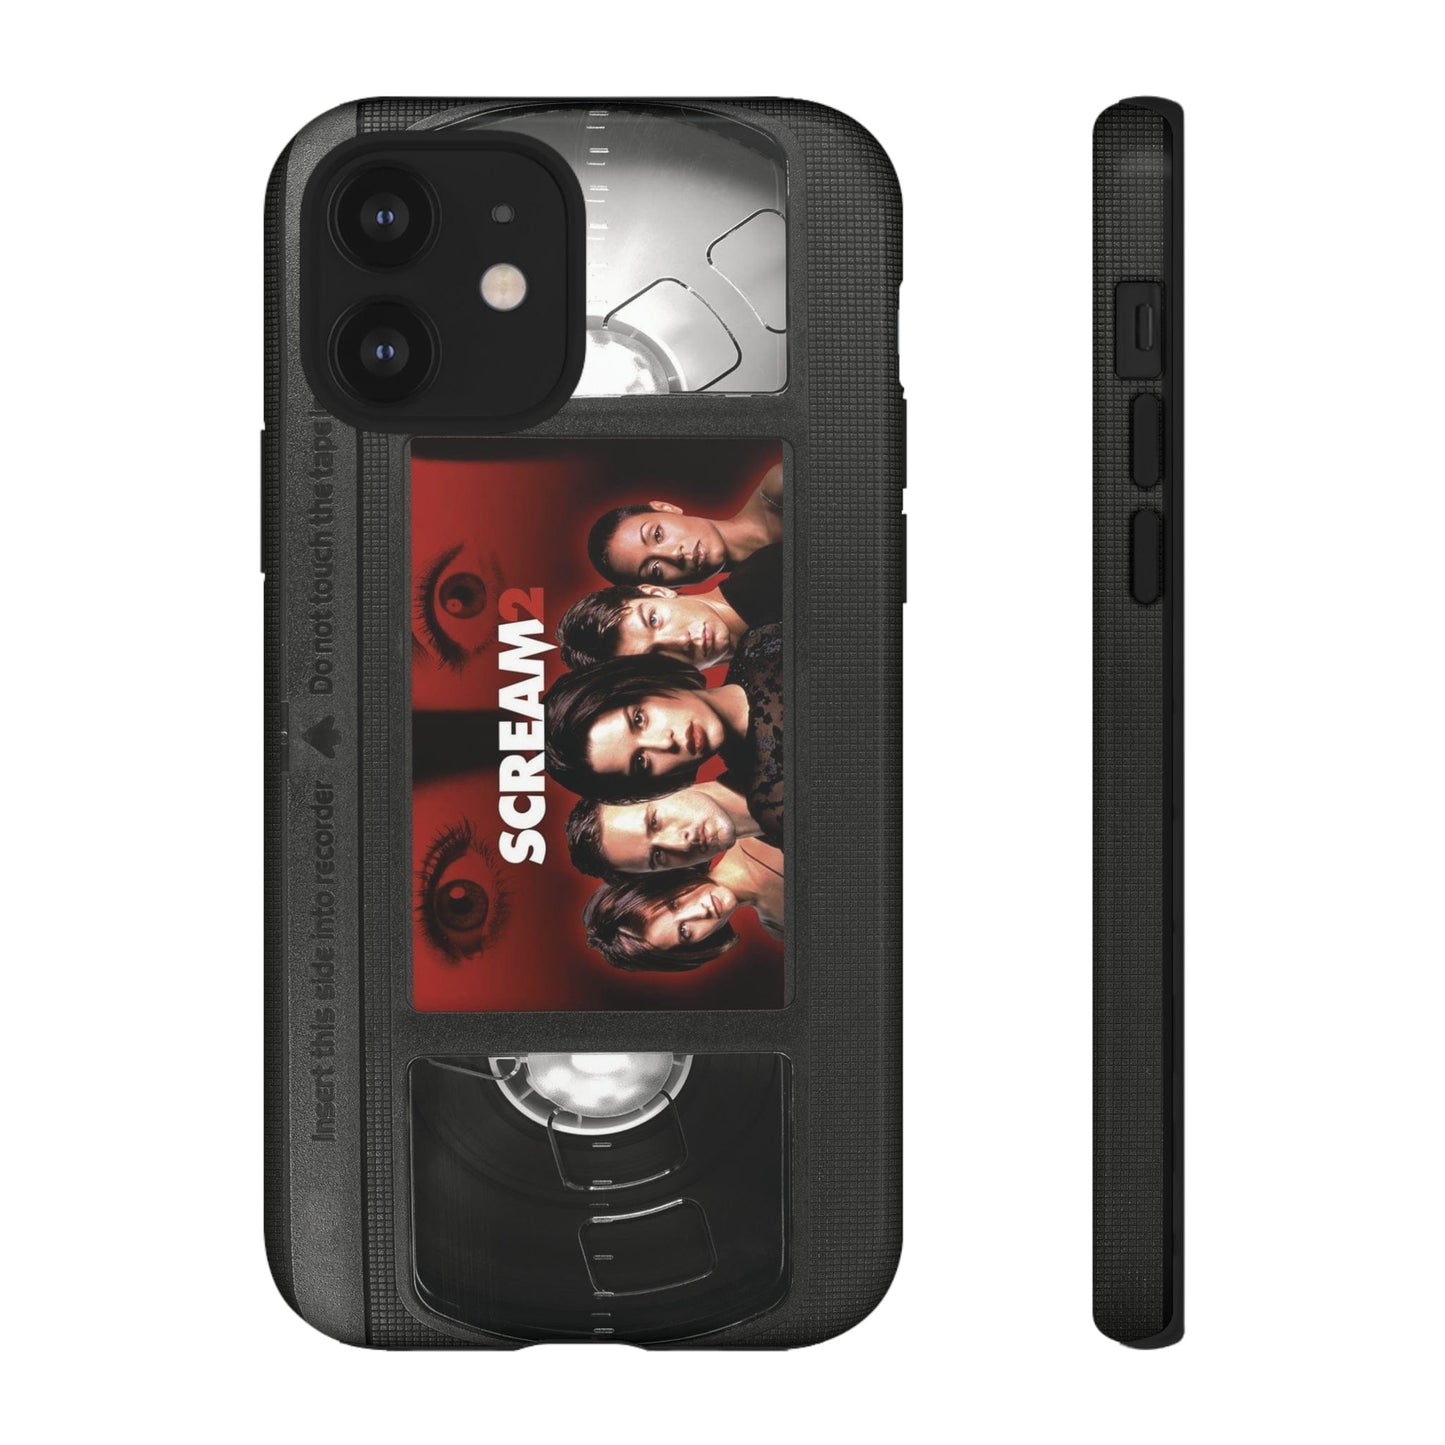 Scream II Impact Resistant VHS Phone Case